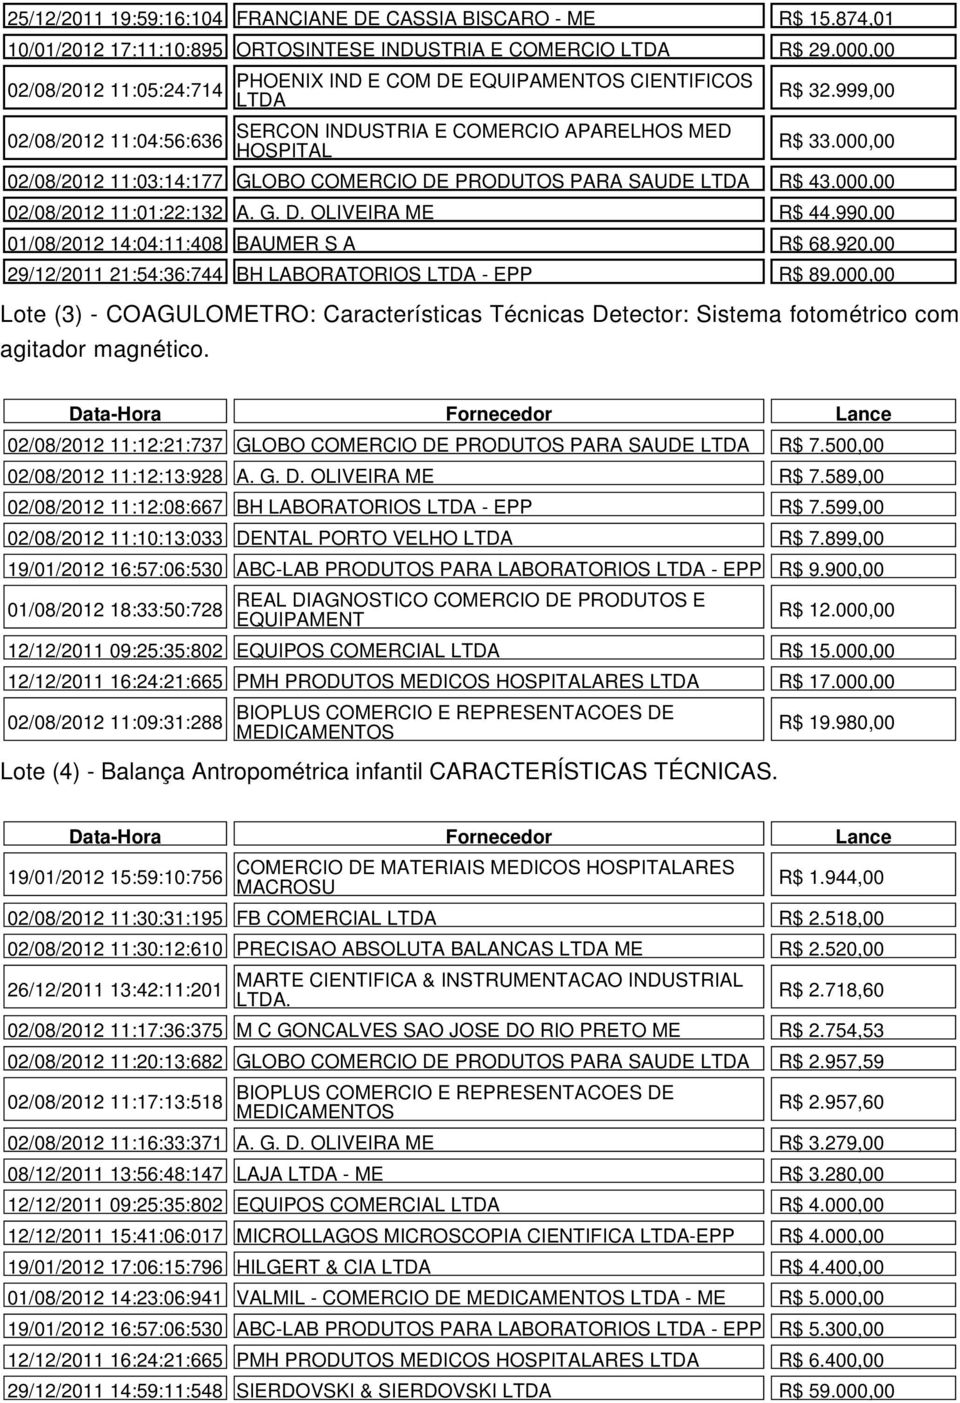 PHOENIX IND E COM DE EQUIPAMENTOS CIENTIFICOS LTDA SERCON INDUSTRIA E COMERCIO APARELHOS MED HOSPITAL R$ 32.999,00 R$ 33.